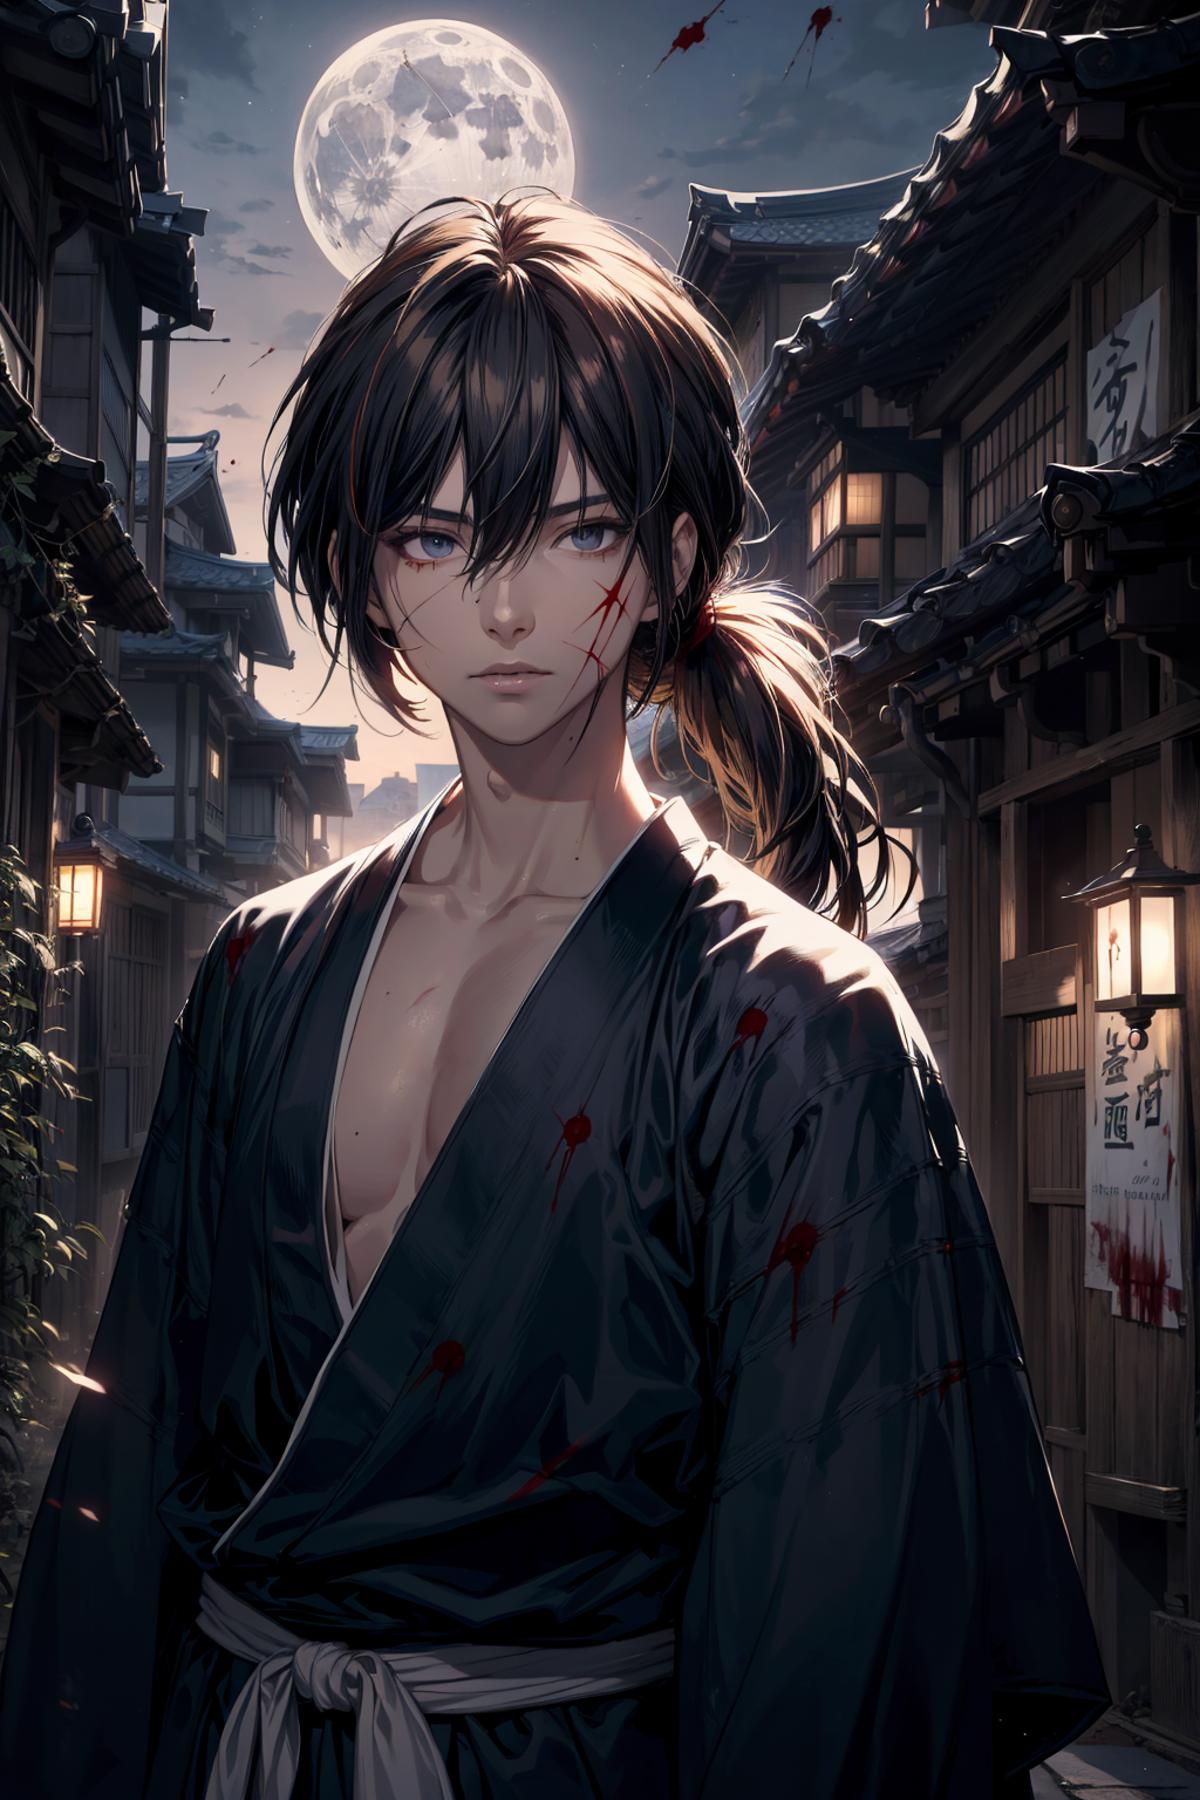 Kenshin Himura (Rurouni Kenshin) image by barusu07